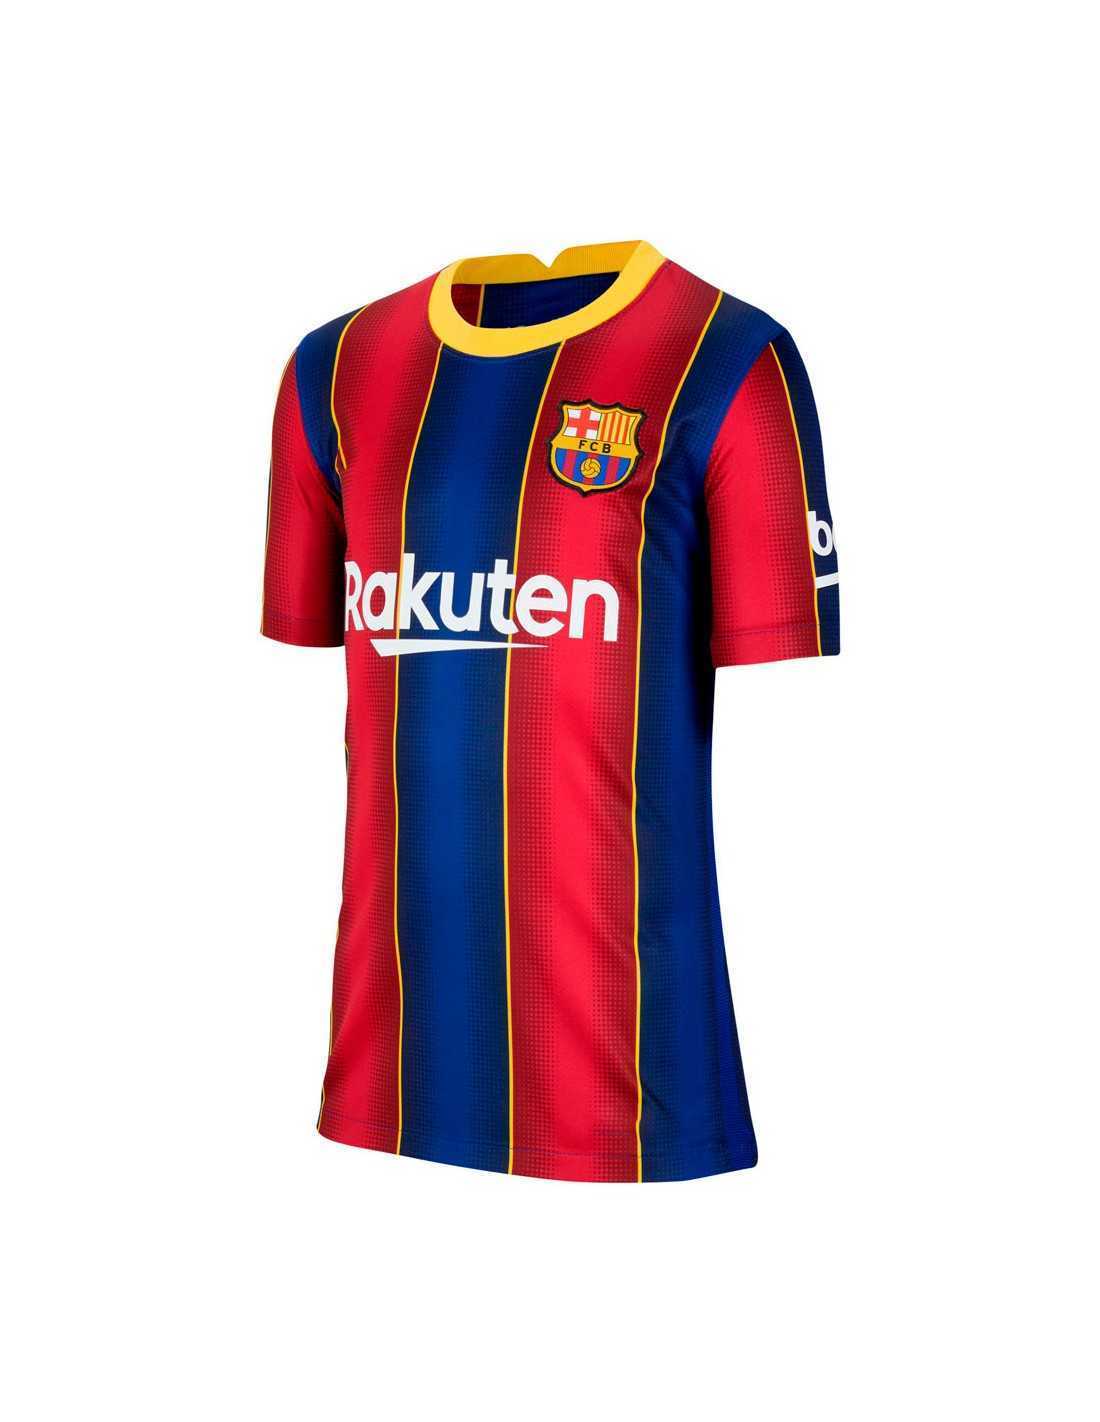 https://ideaprint.pe/2200-thickbox_default/camiseta-de-futbol-barcelona-2020-2021.jpg